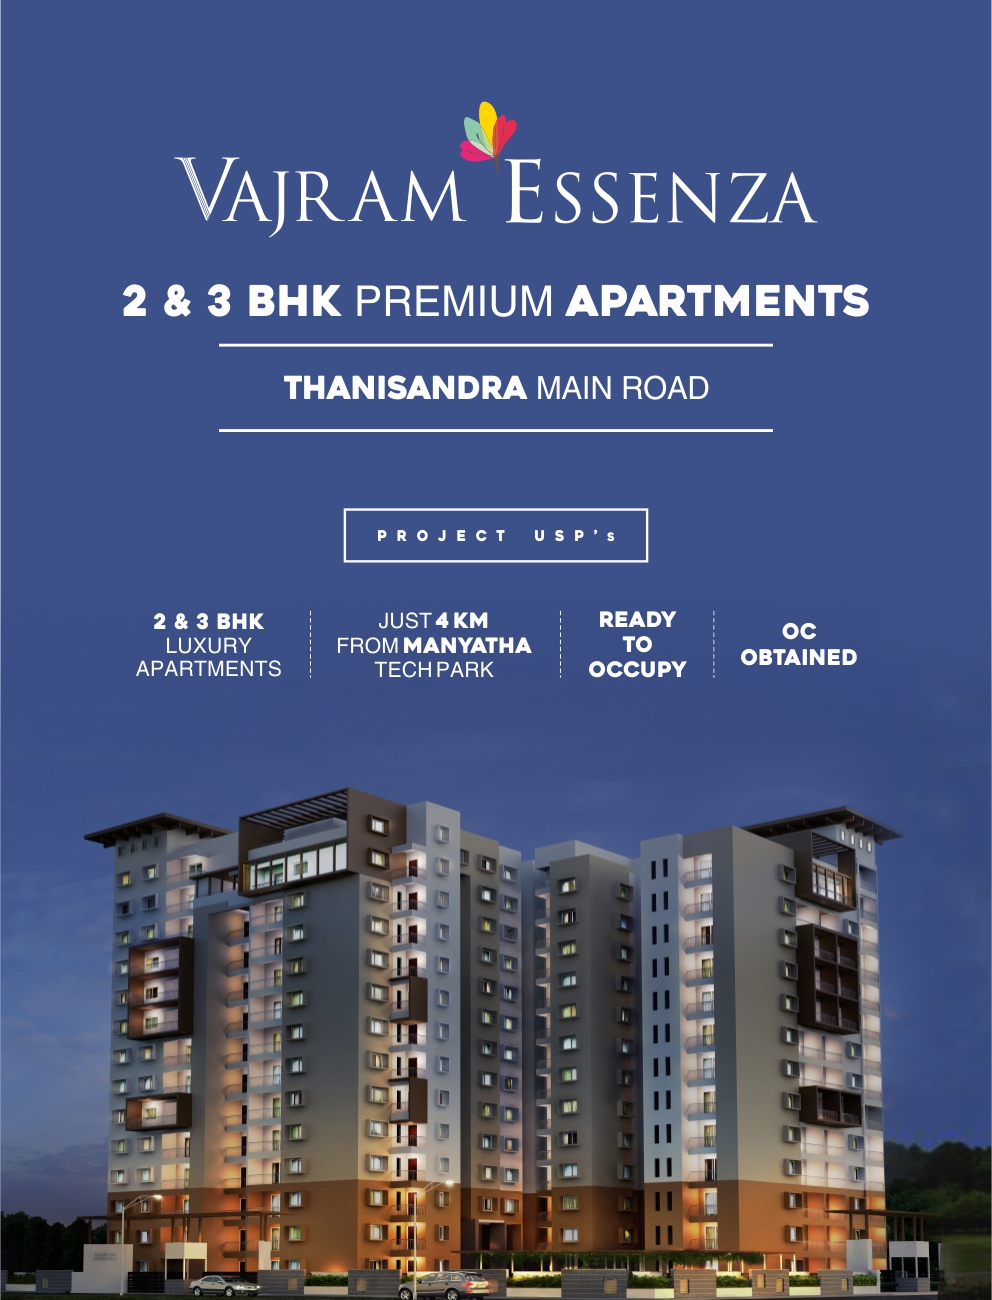 Vajram Essenza 2 & 3 BHK premium apartments at Thanisandra Main Road, Bangalore Update